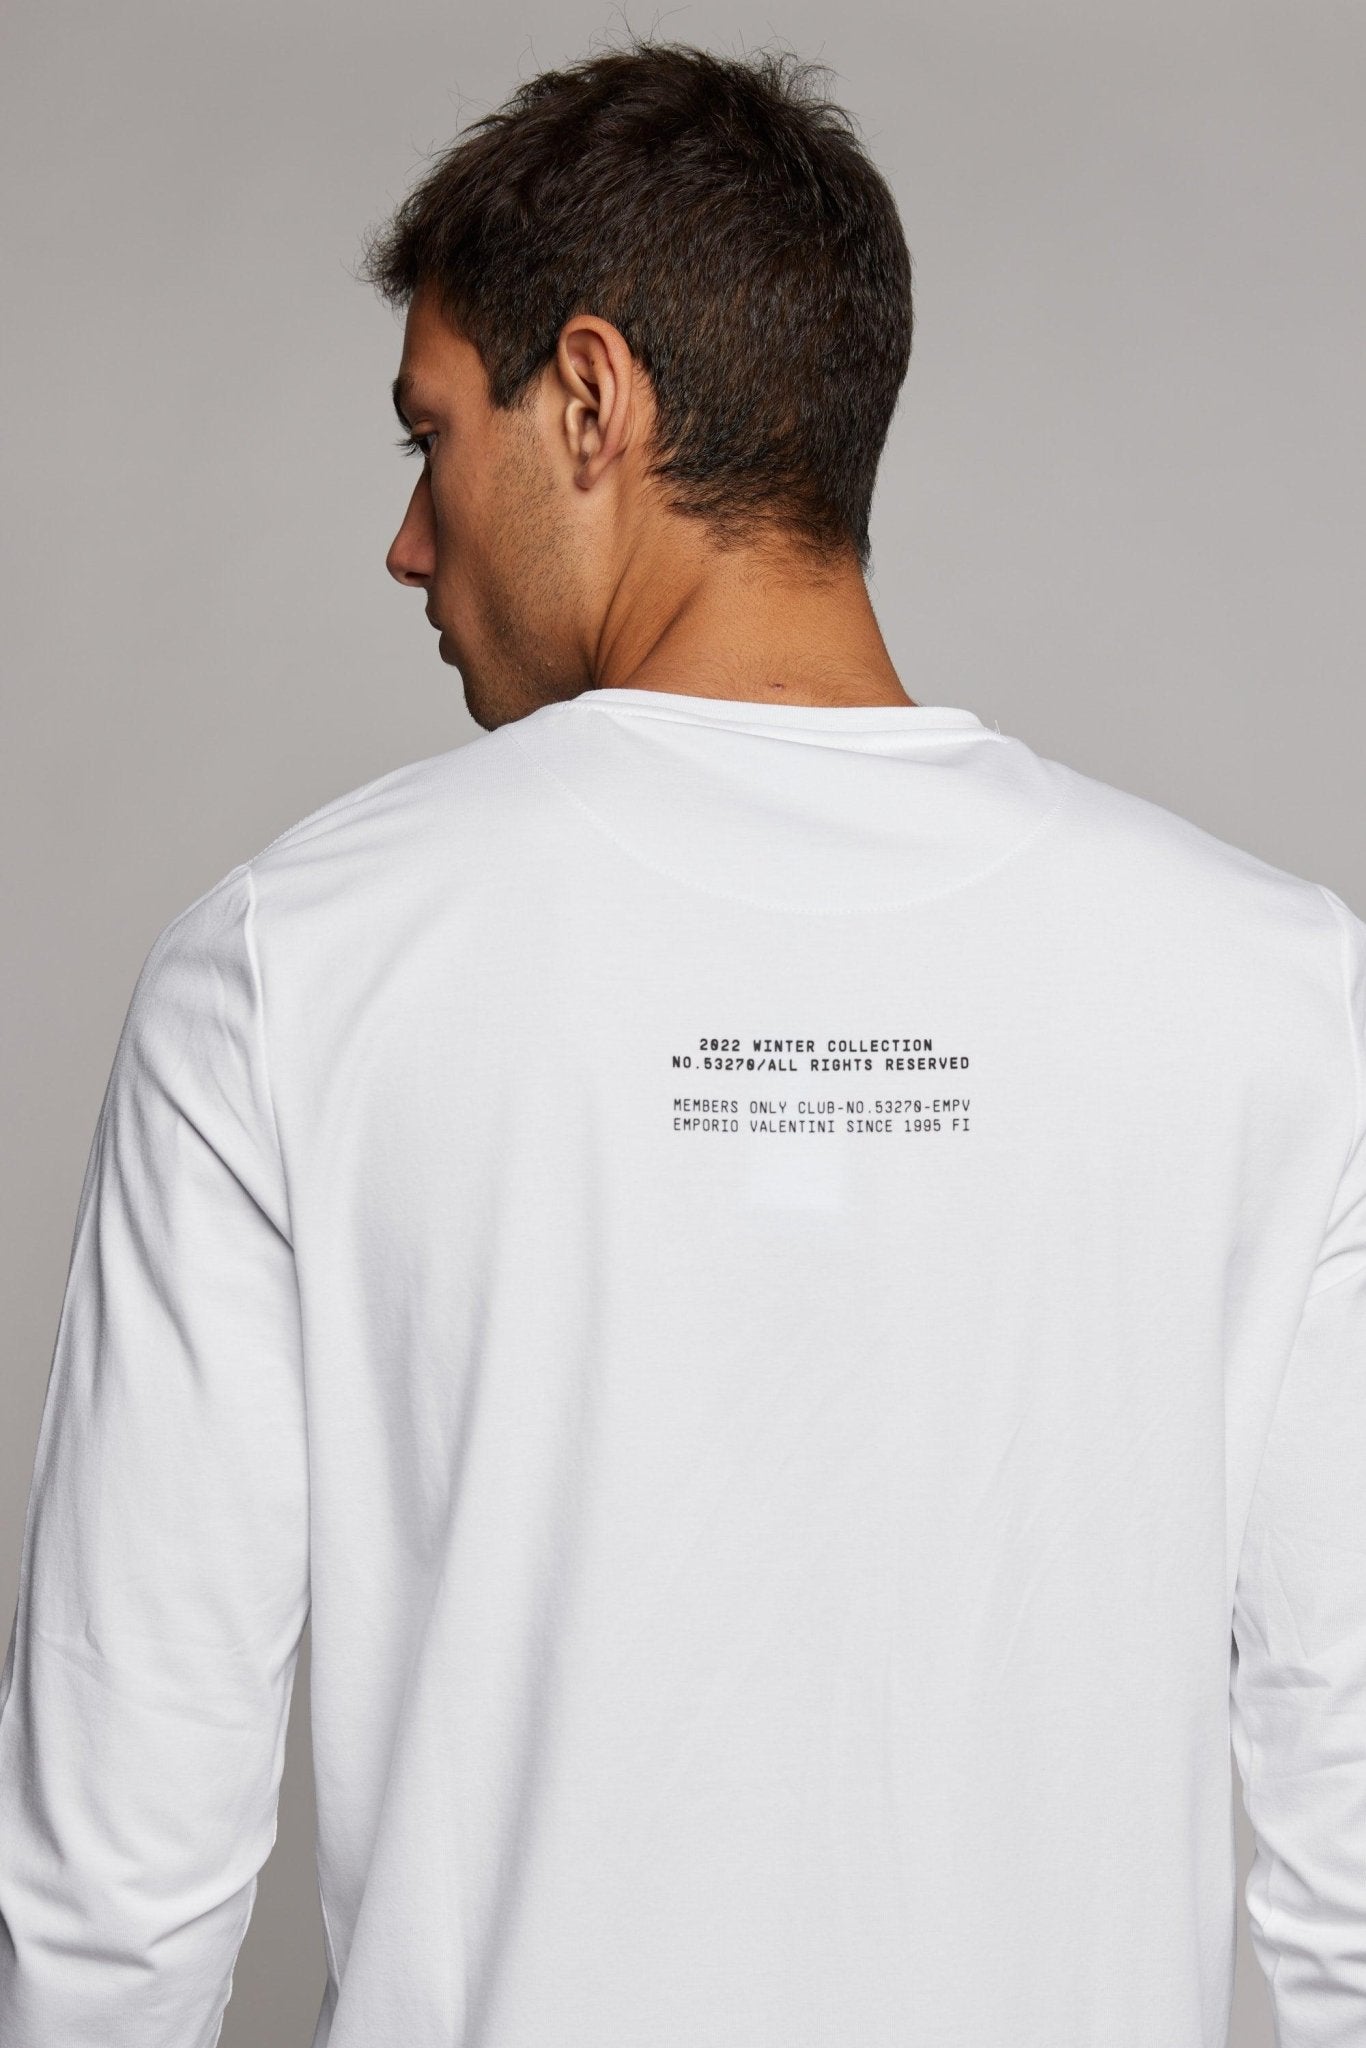 EMPORIO VALENTINI - חולצה בצבע לבן עם הדפס דולרים - MASHBIR//365